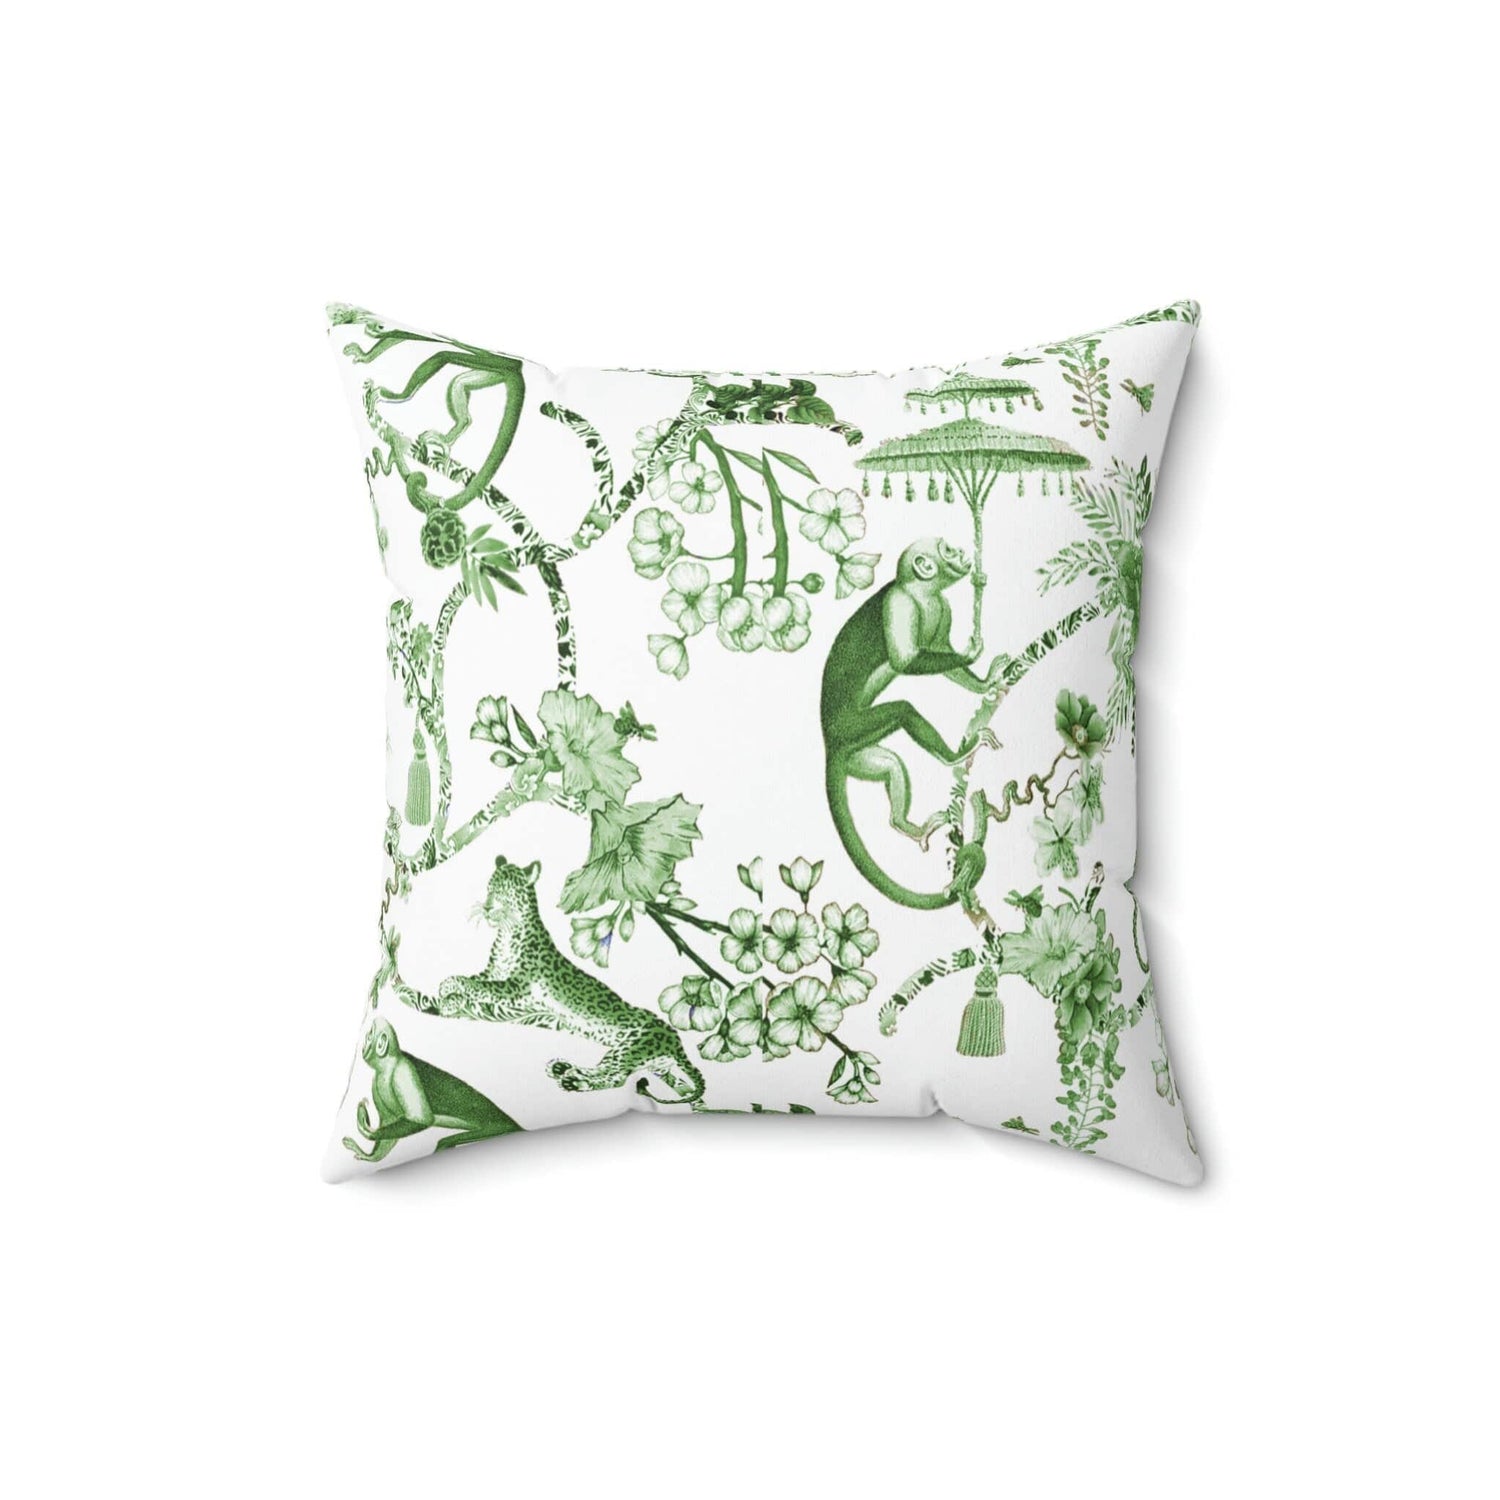 Kate McEnroe New York Chinoiserie Throw Pillow, Floral Green, White Chinoiserie Jungle, Farmhouse Country Cottage Accent Pillow, Botanical Toile Home Decor Throw Pillows